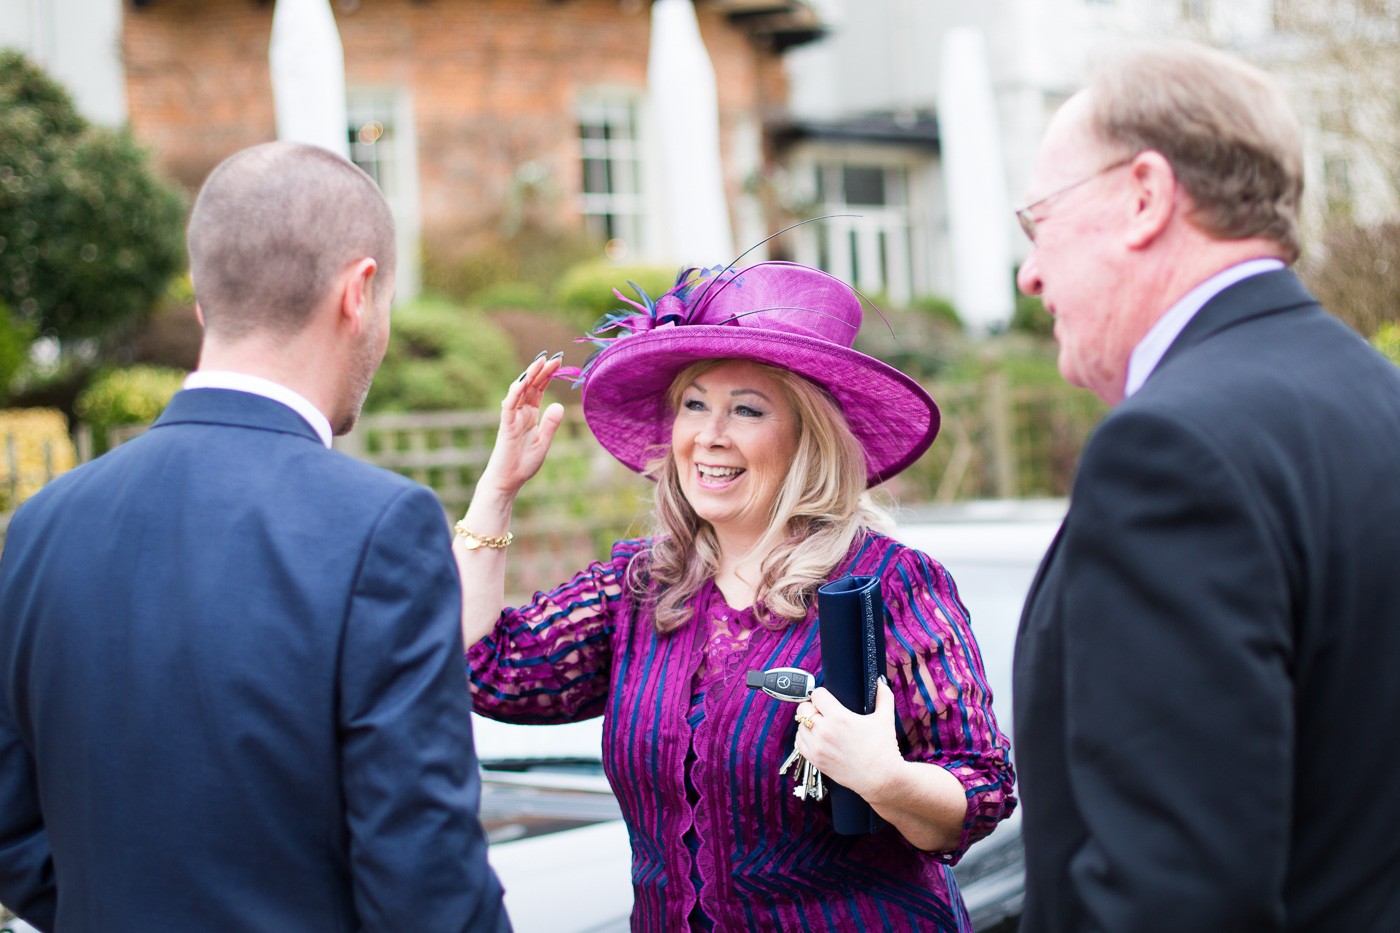 Elegant Lady in purple touching her hat